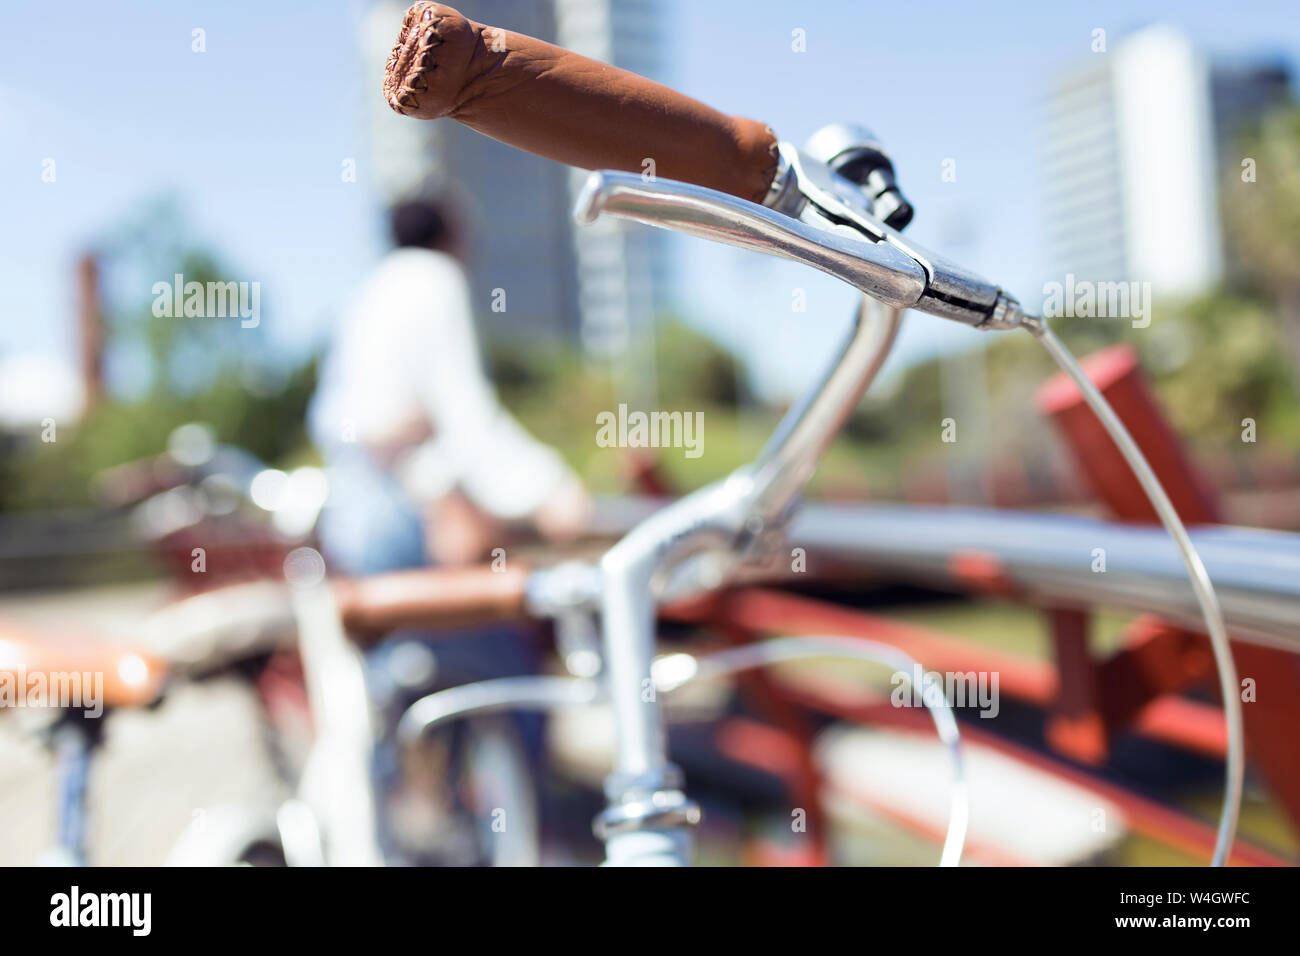 Focus on bicycle handle Stock Photo